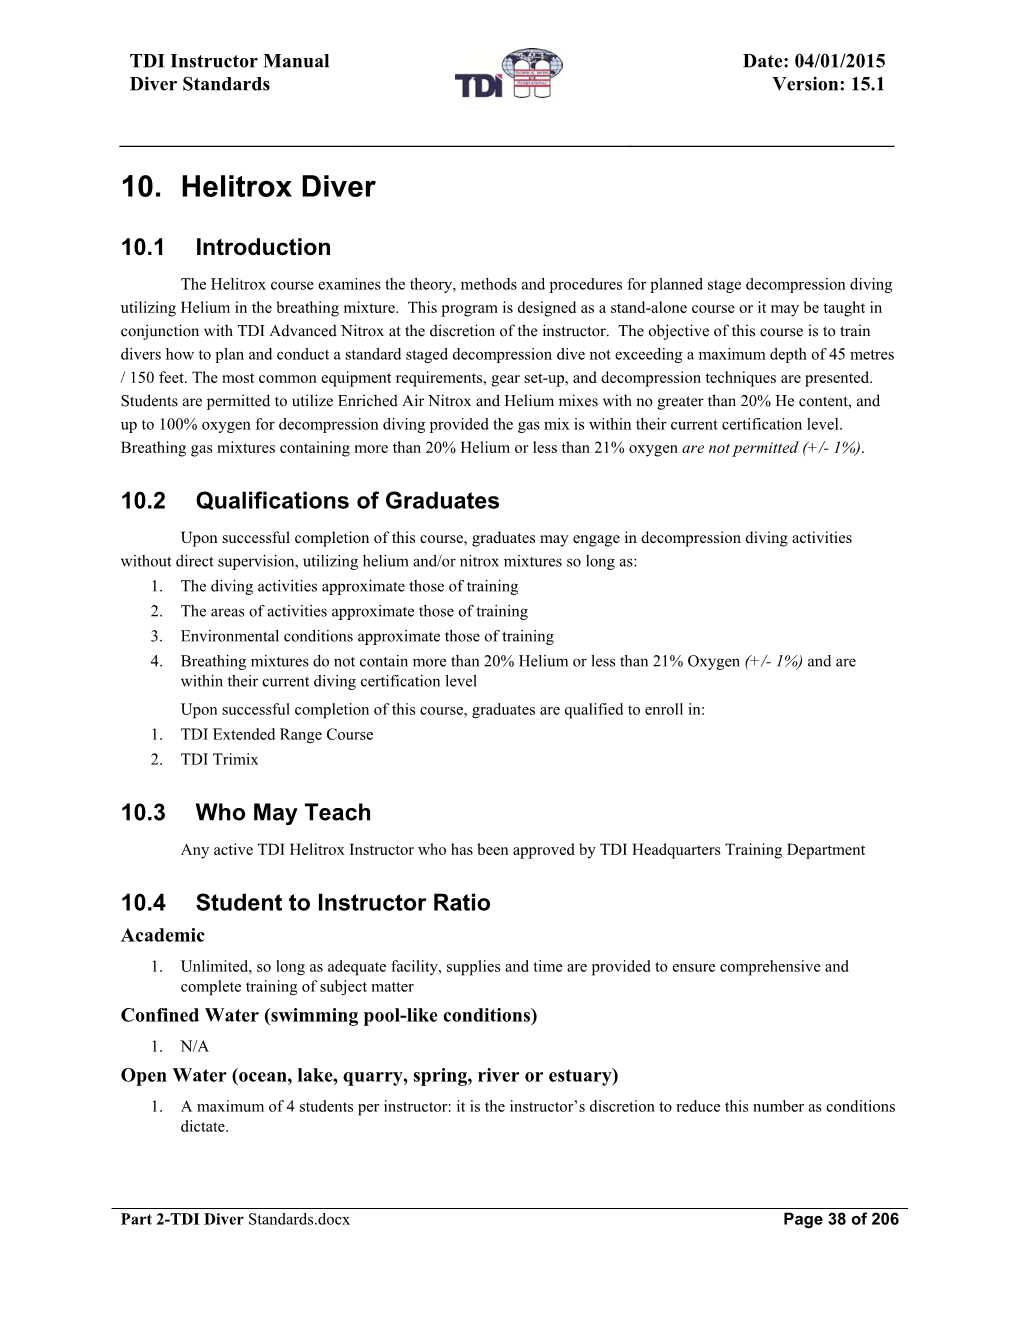 10. Helitrox Diver